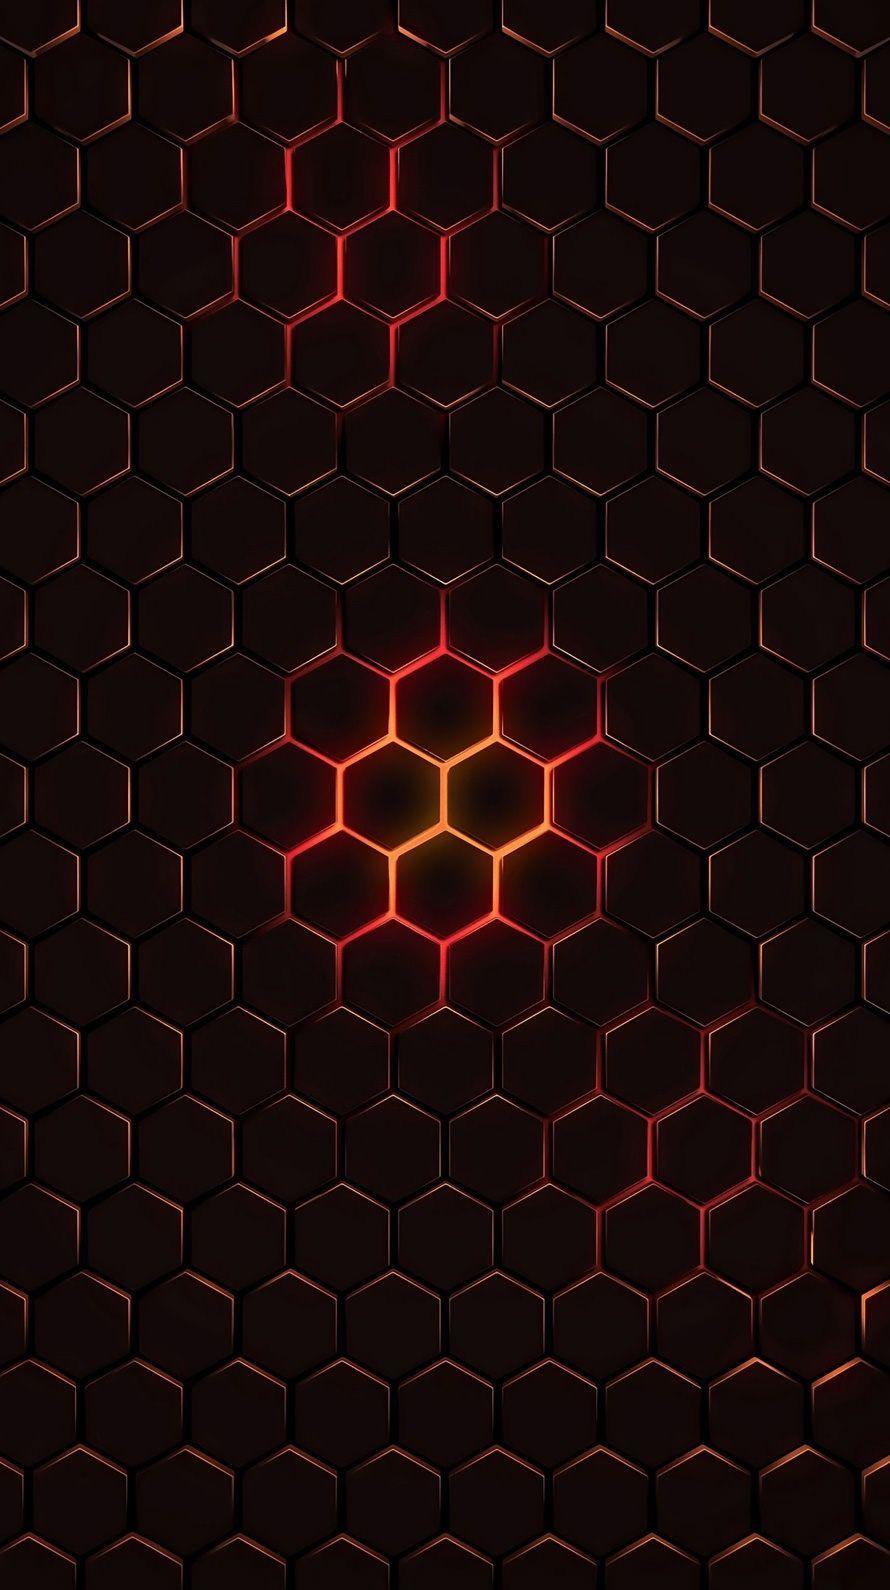 Download wallpaper 720x1280 lines, red, glow, dark, black samsung galaxy  mini s3, s5, neo, alpha, sony xperia compact z1, z2, z3, asus zenfone hd  background